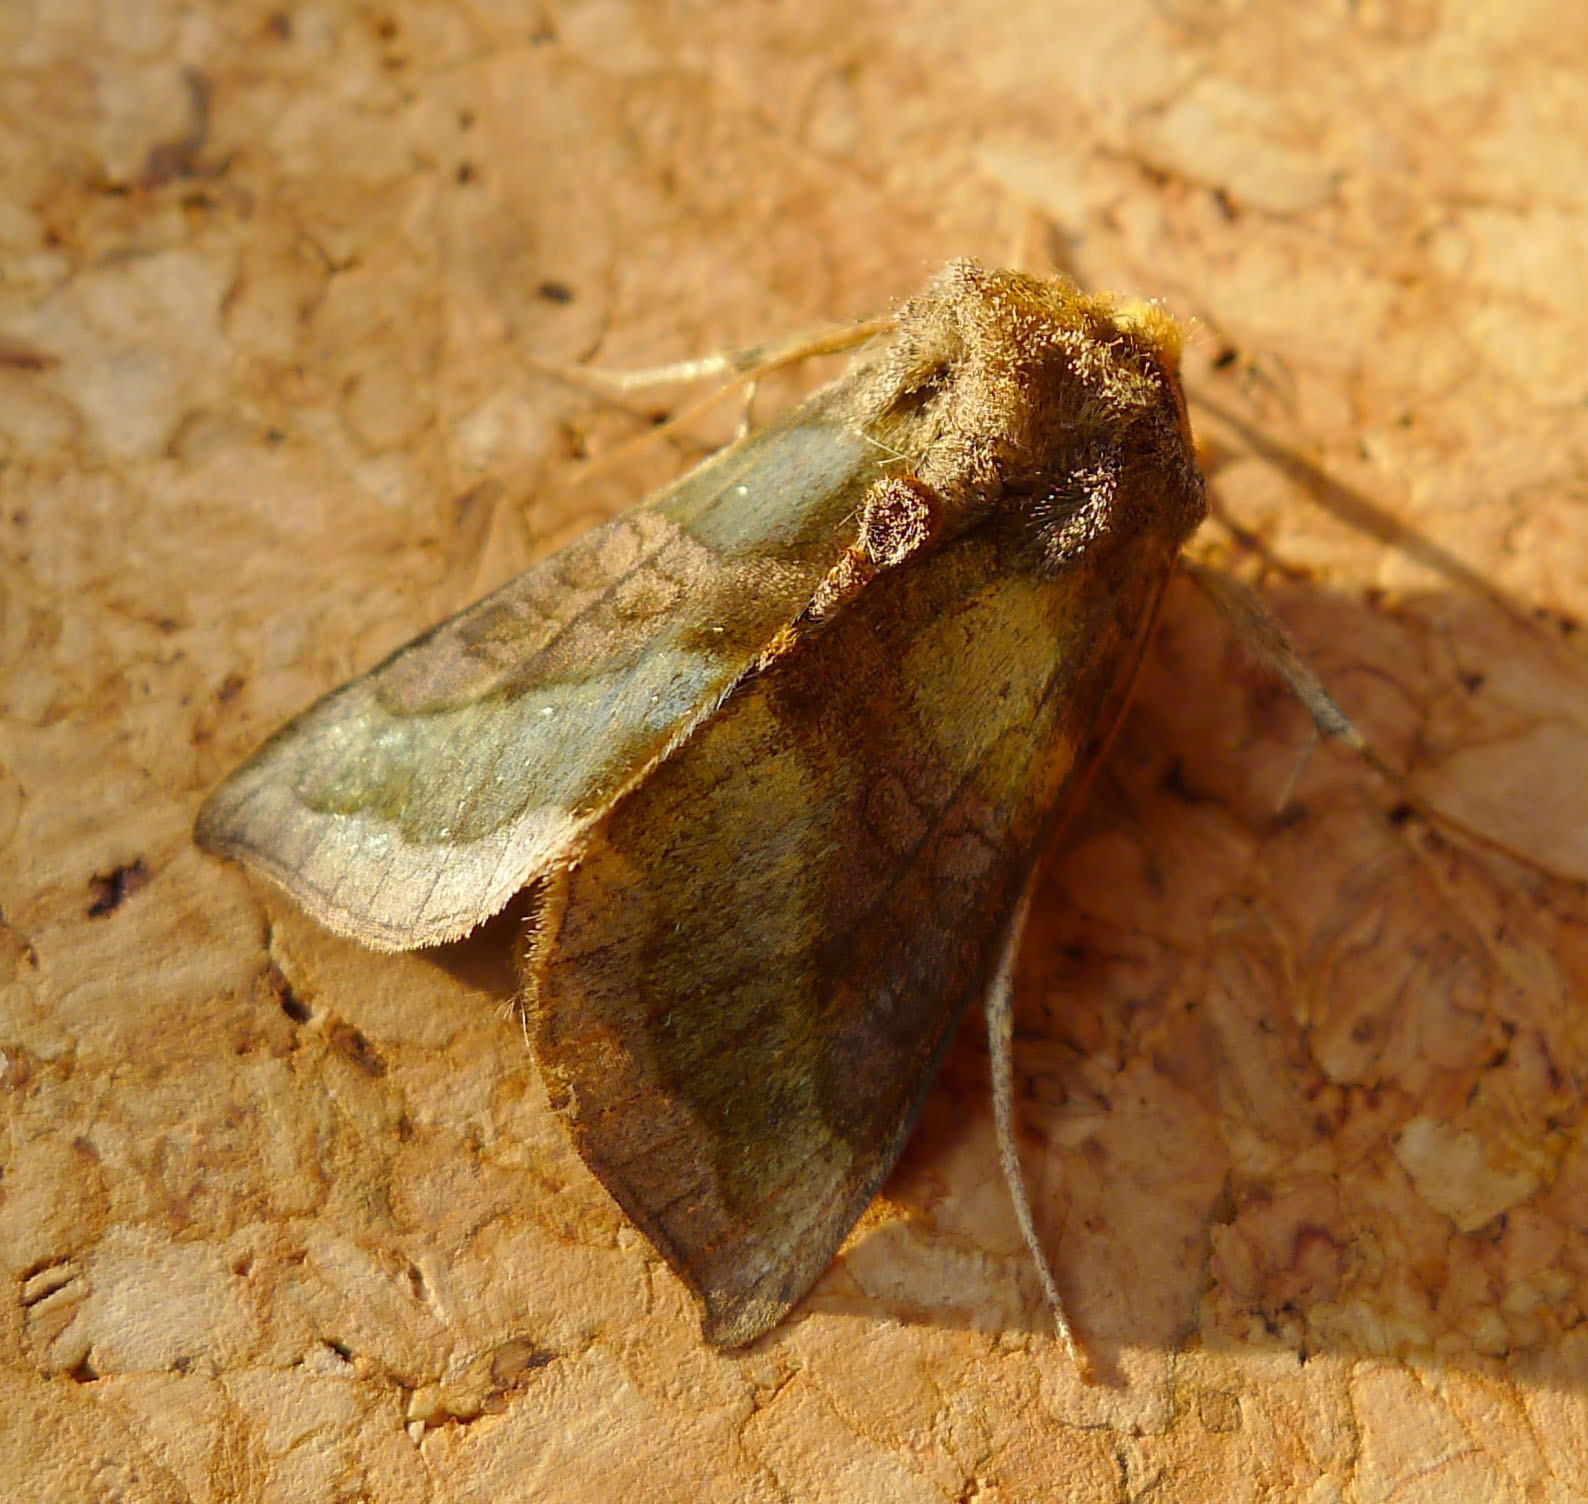 a leaf - like insect sitting on a wood slab